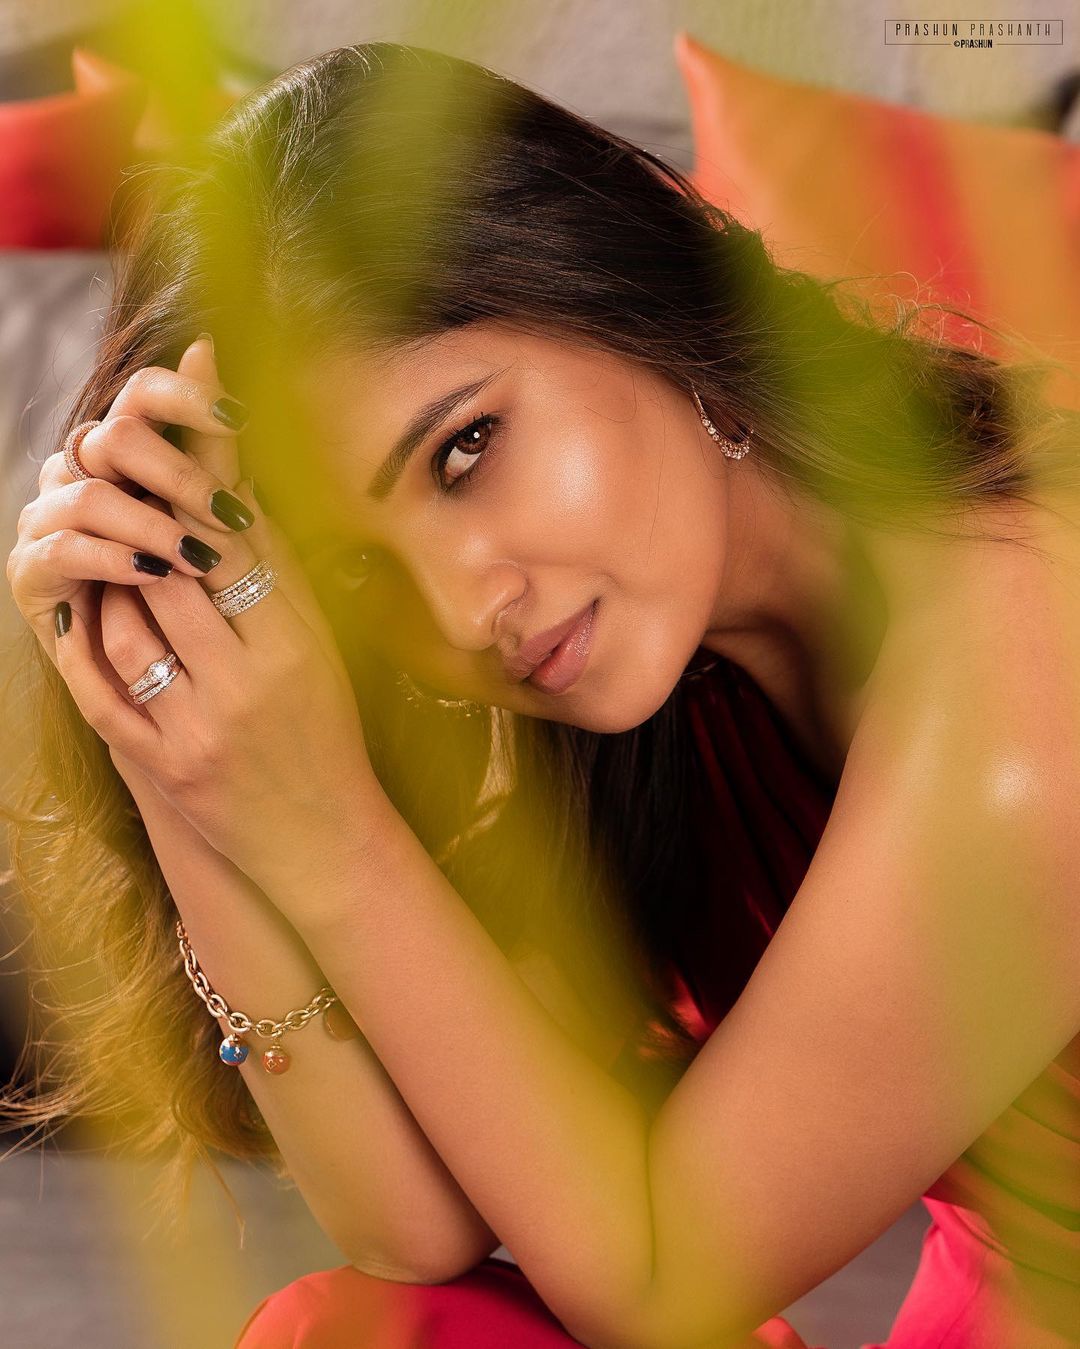 Actress Vani Bhojan Latest Hot Photoshoot Stills in Red Dress